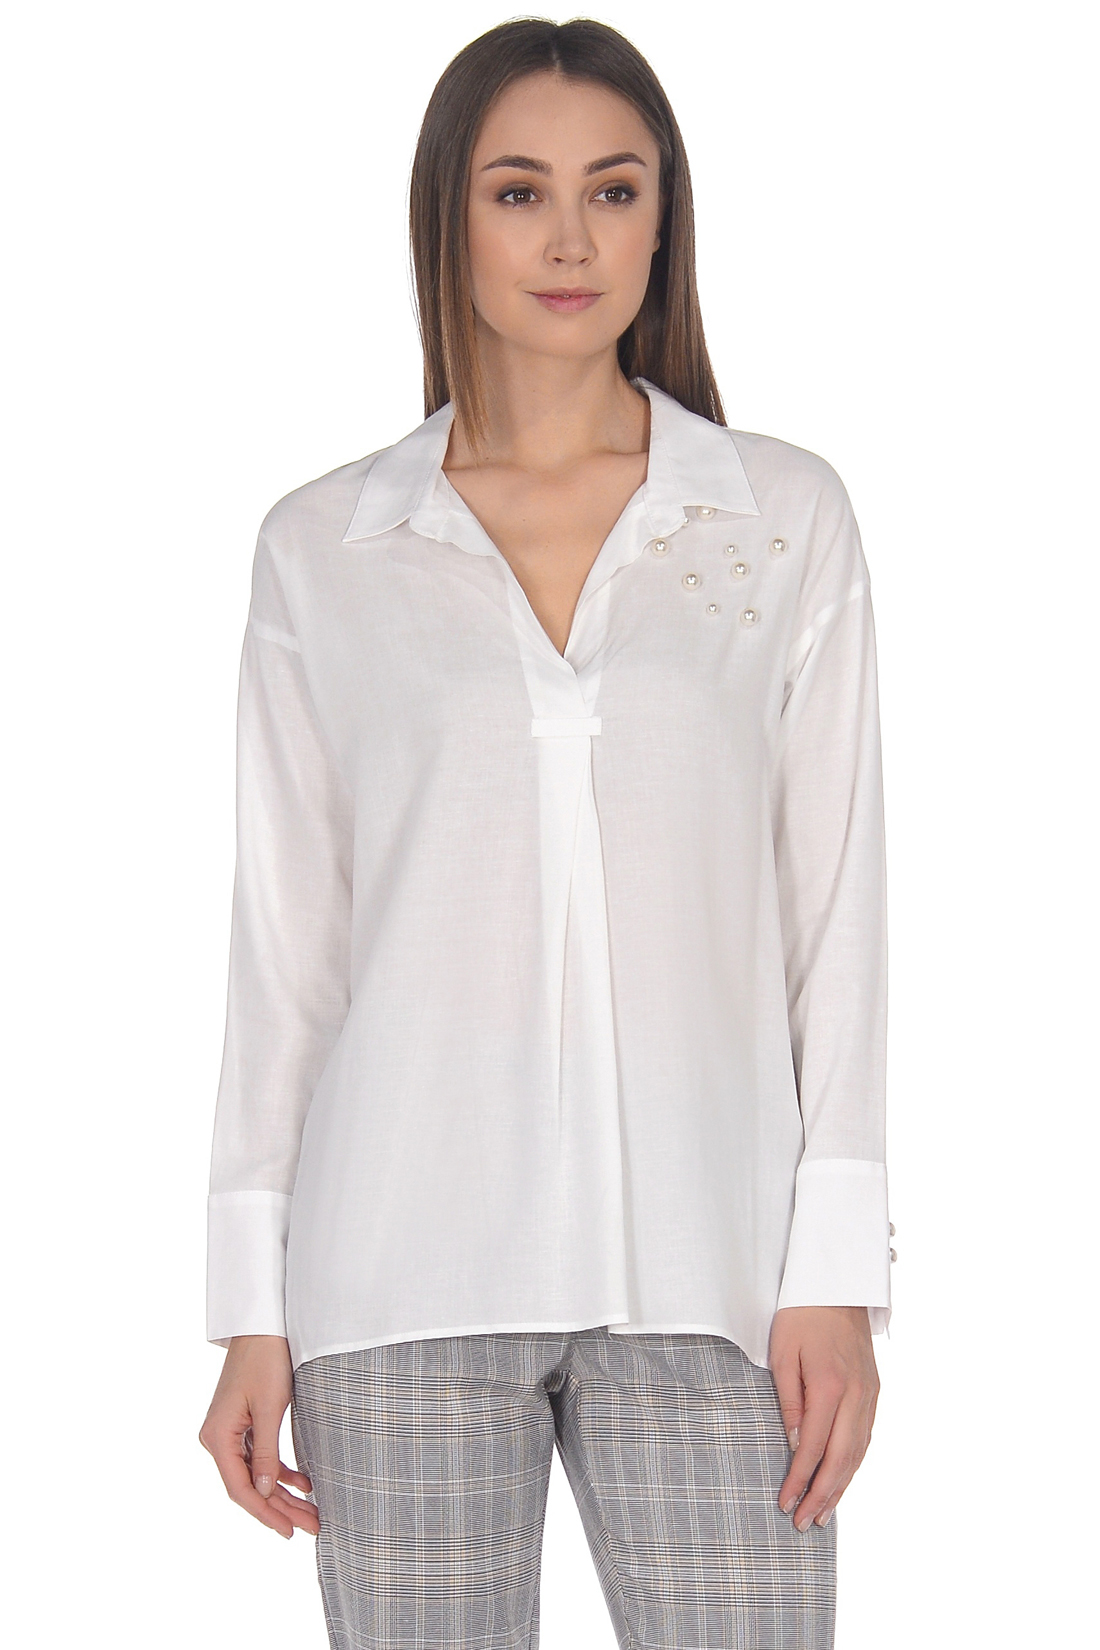 Белая блузка с жемчугом (арт. baon B179043), размер XS, цвет белый Белая блузка с жемчугом (арт. baon B179043) - фото 1